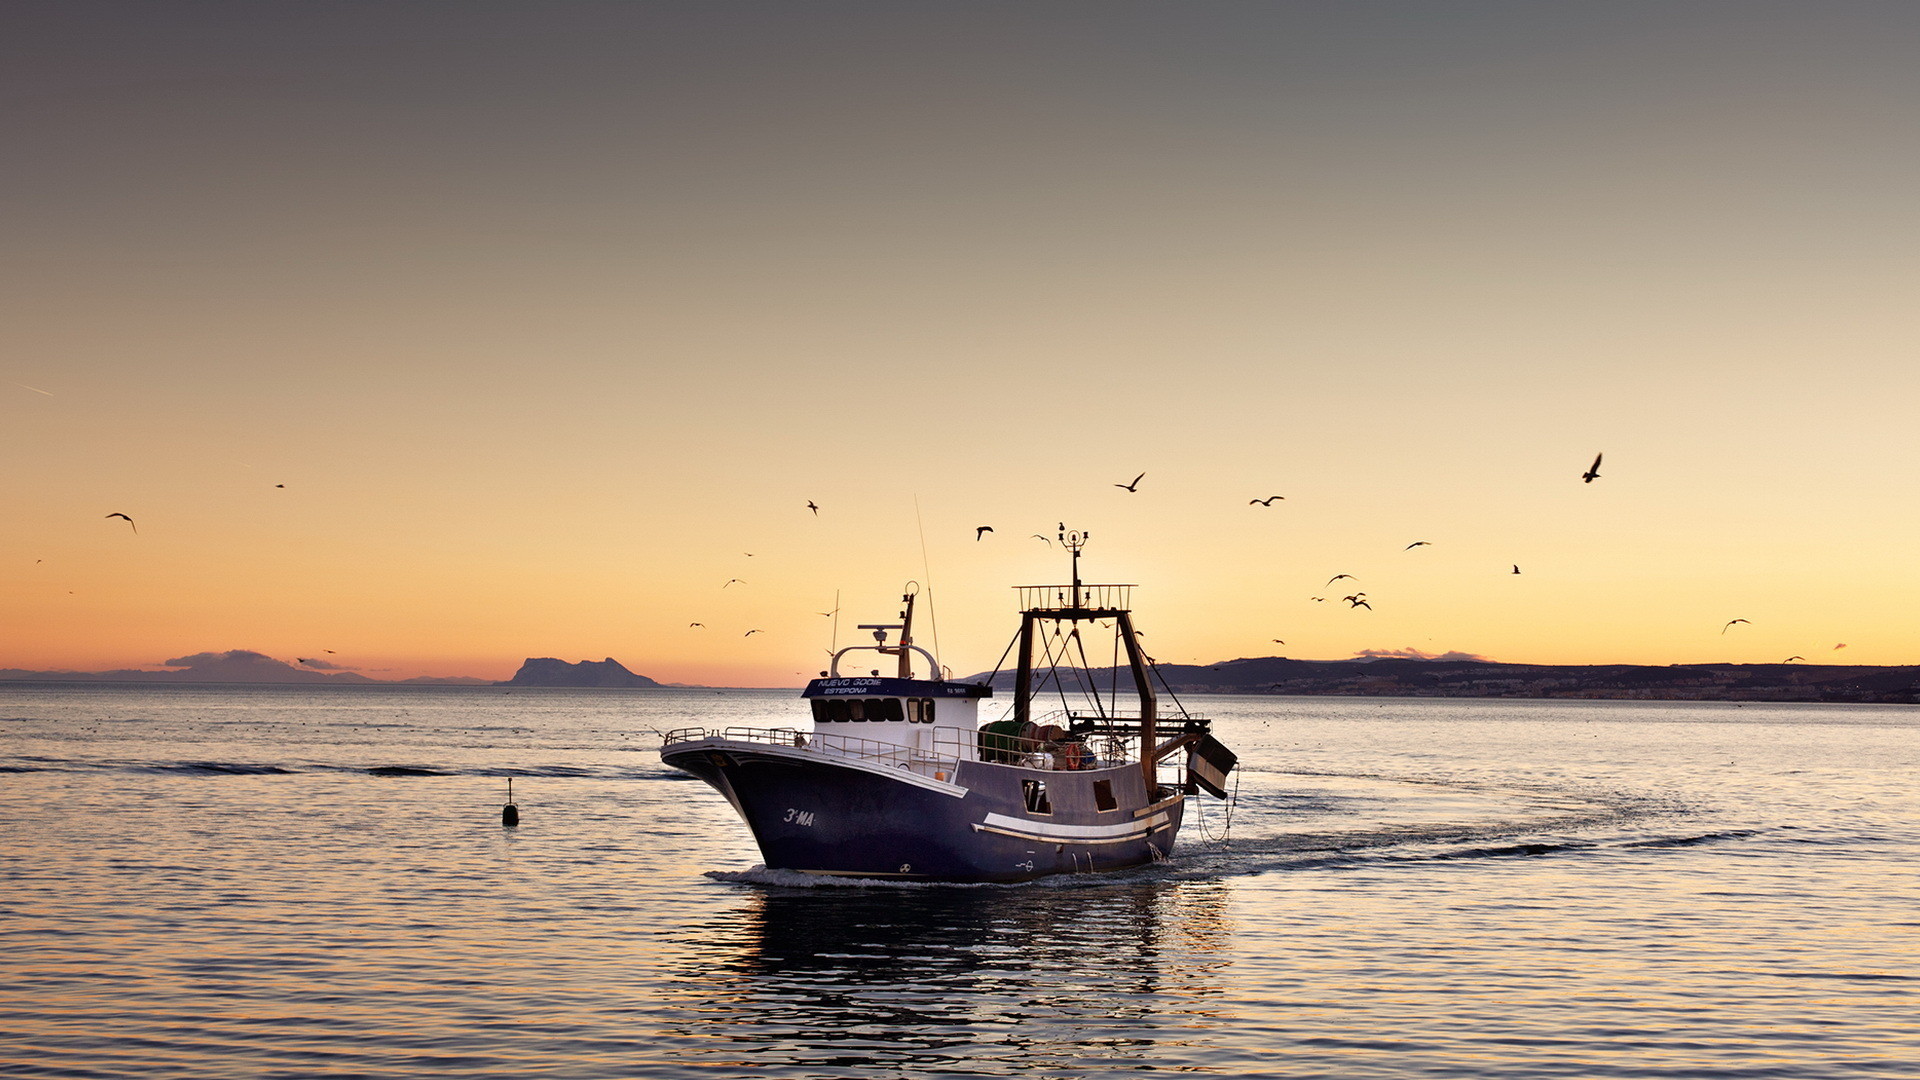 saltwater fishing wallpaper,water transportation,boat,vehicle,sky,fishing vessel